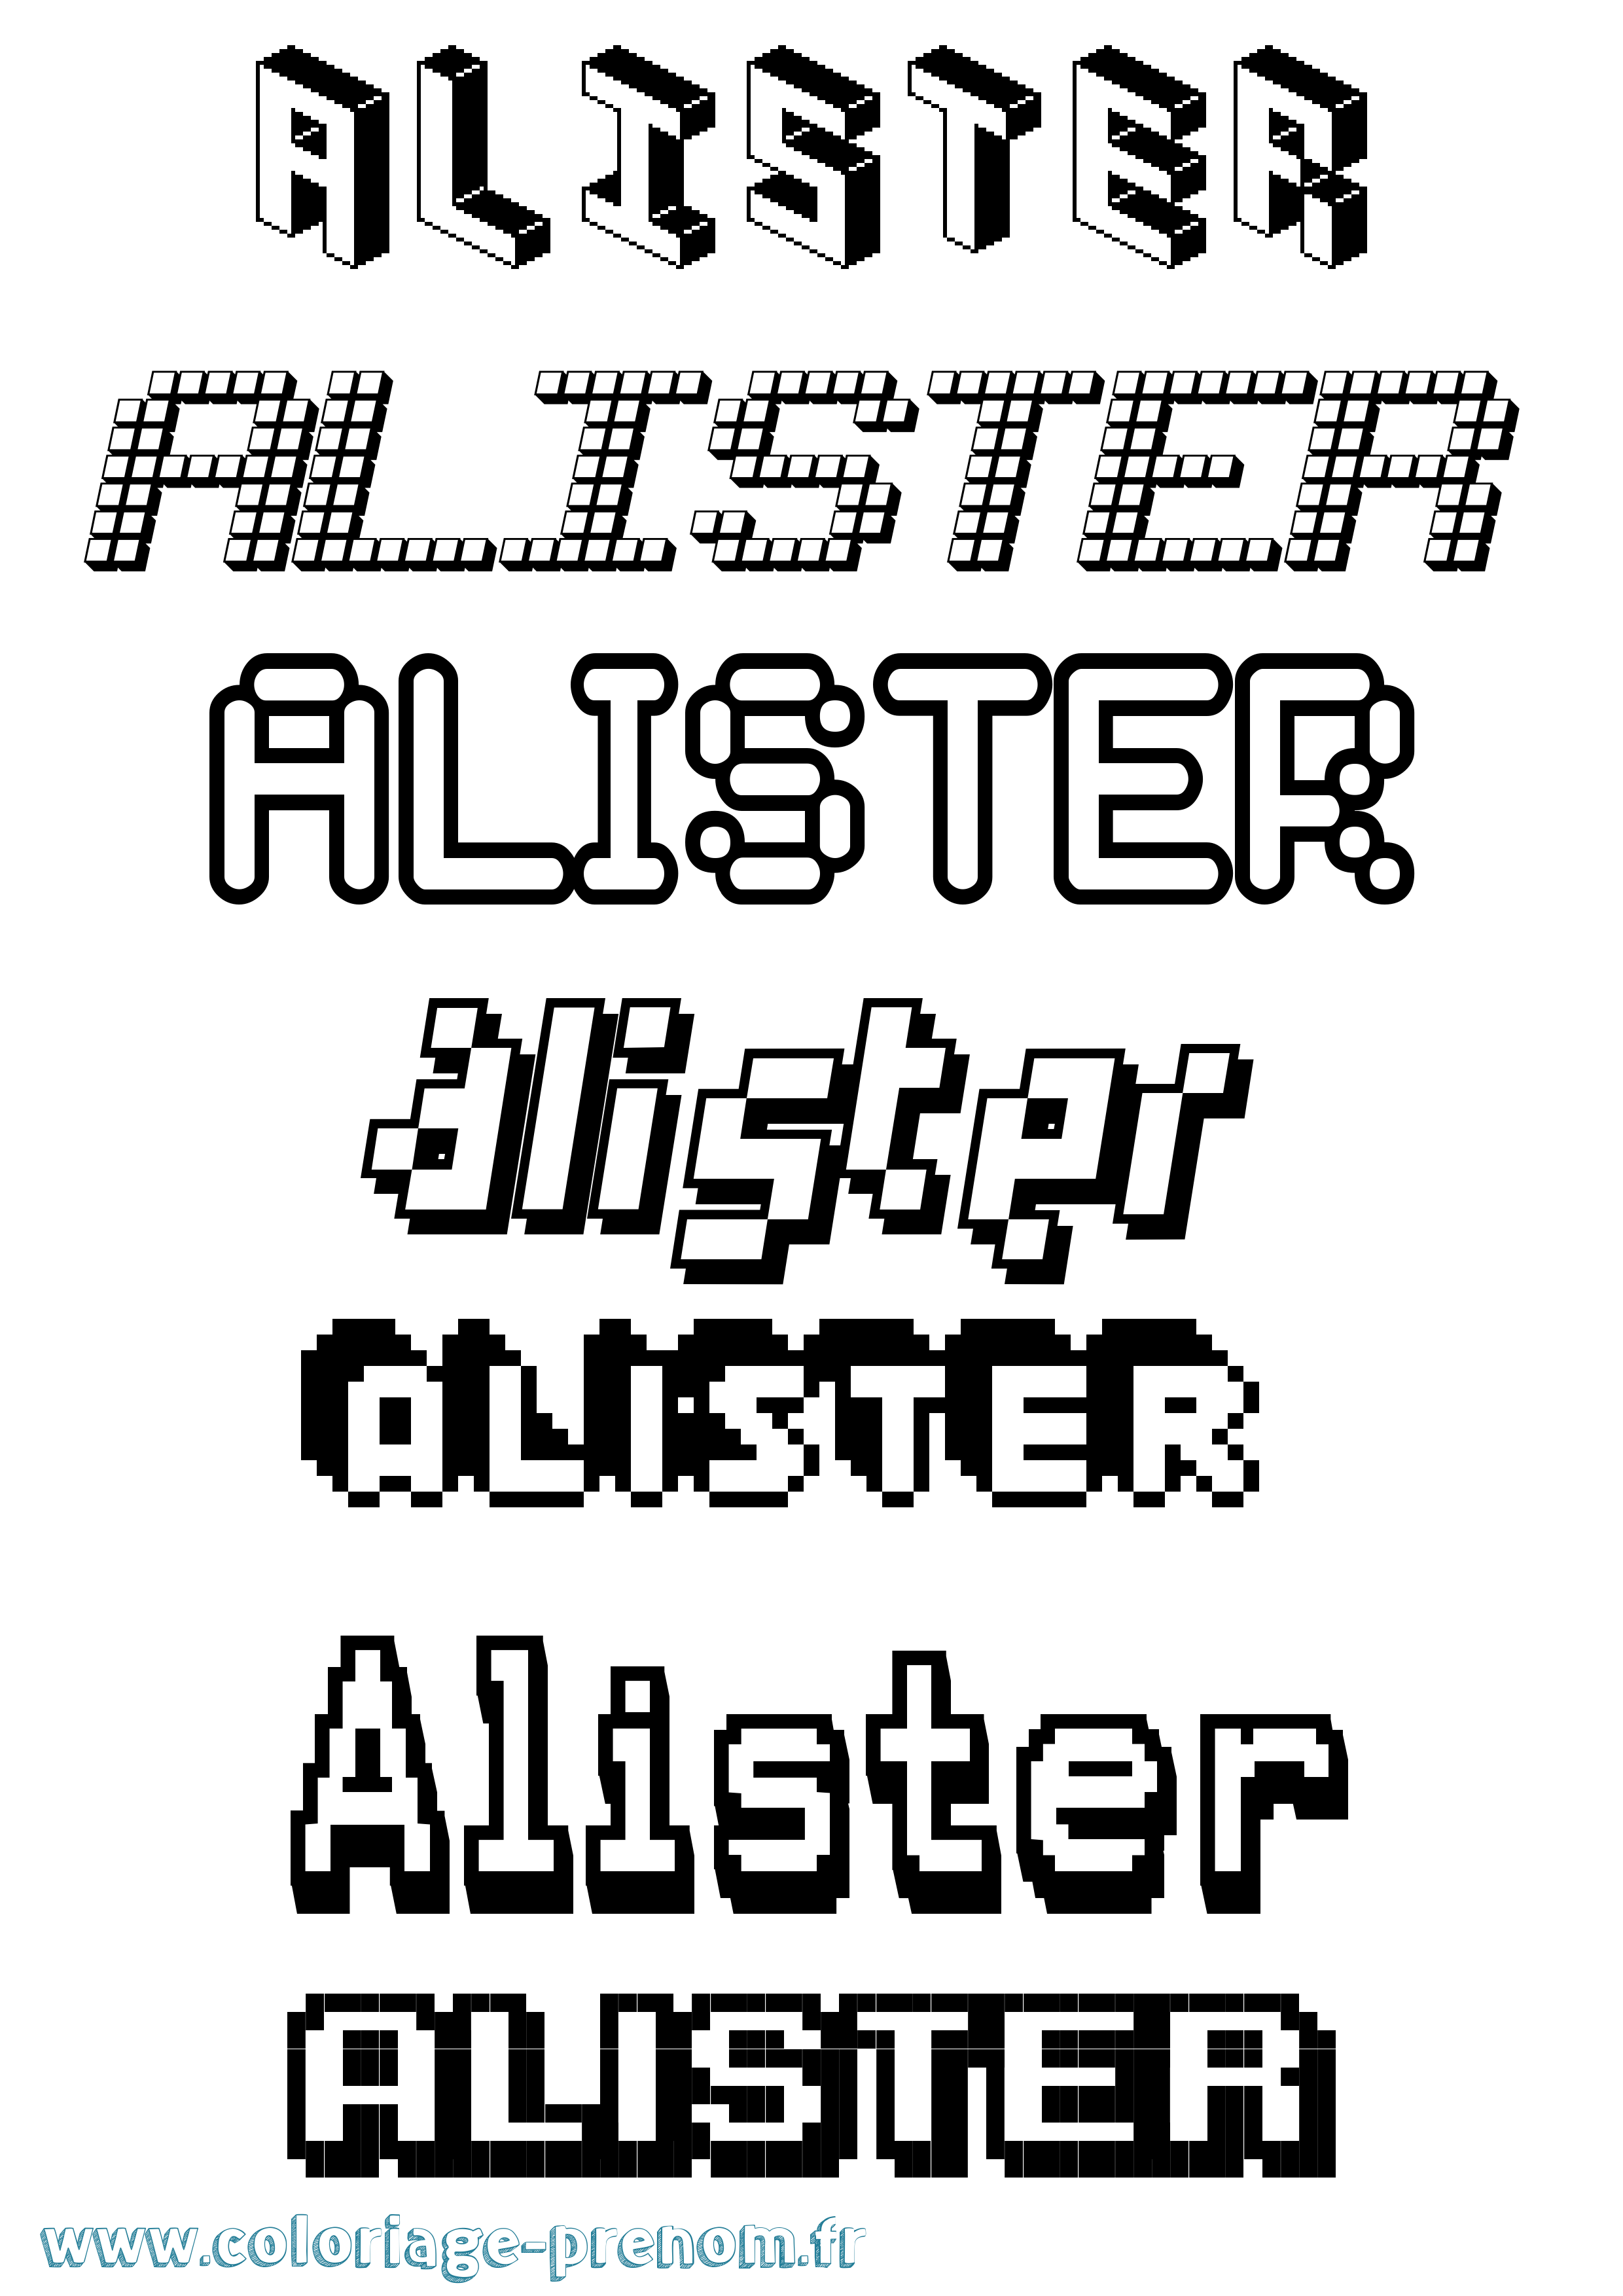 Coloriage prénom Alister Pixel